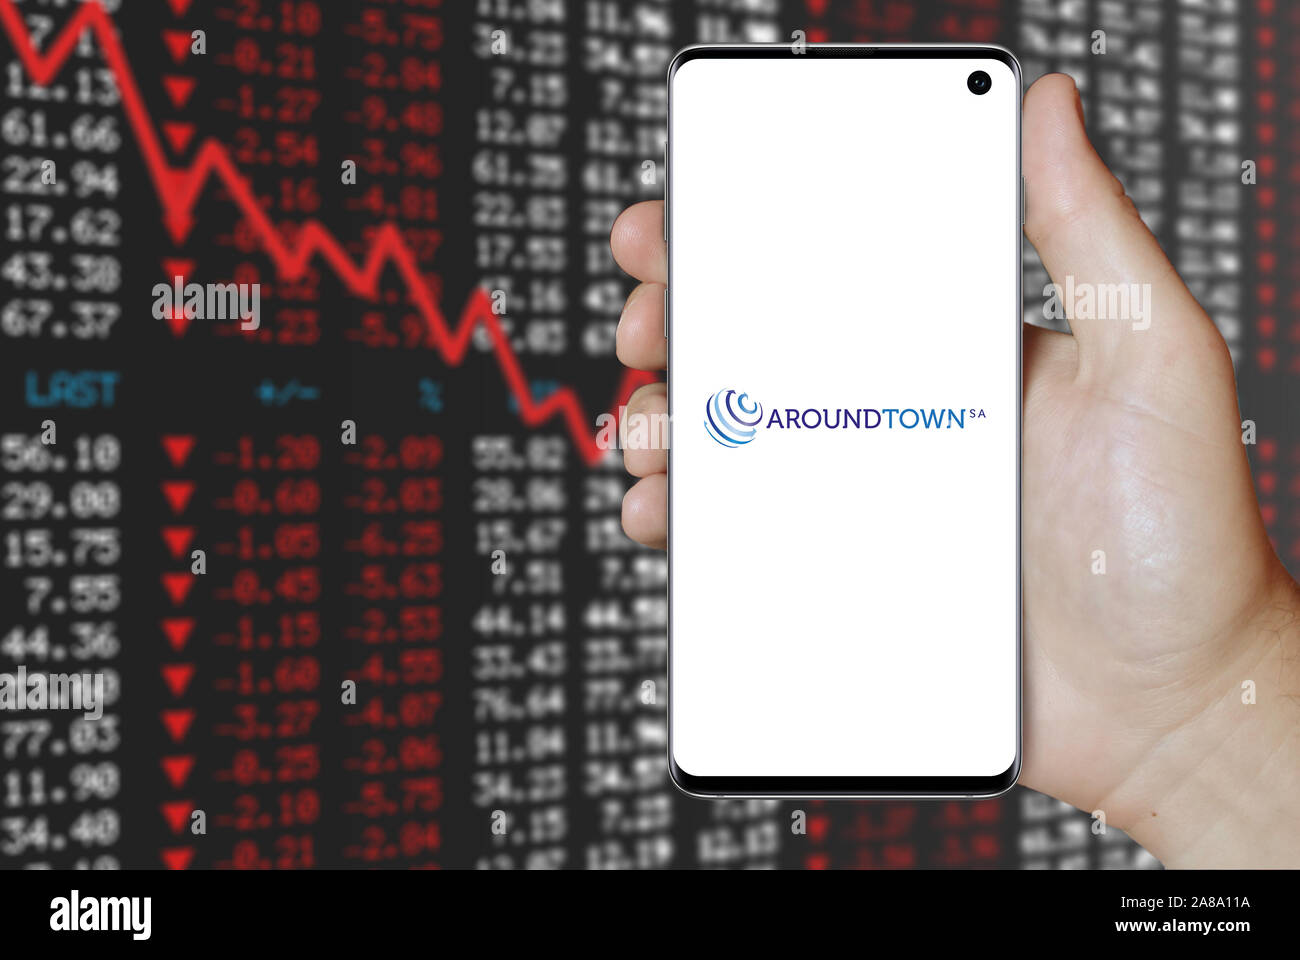 Logo of public company Aroundtown SA displayed on a smartphone. Negative stock market background. Credit: PIXDUCE Stock Photo